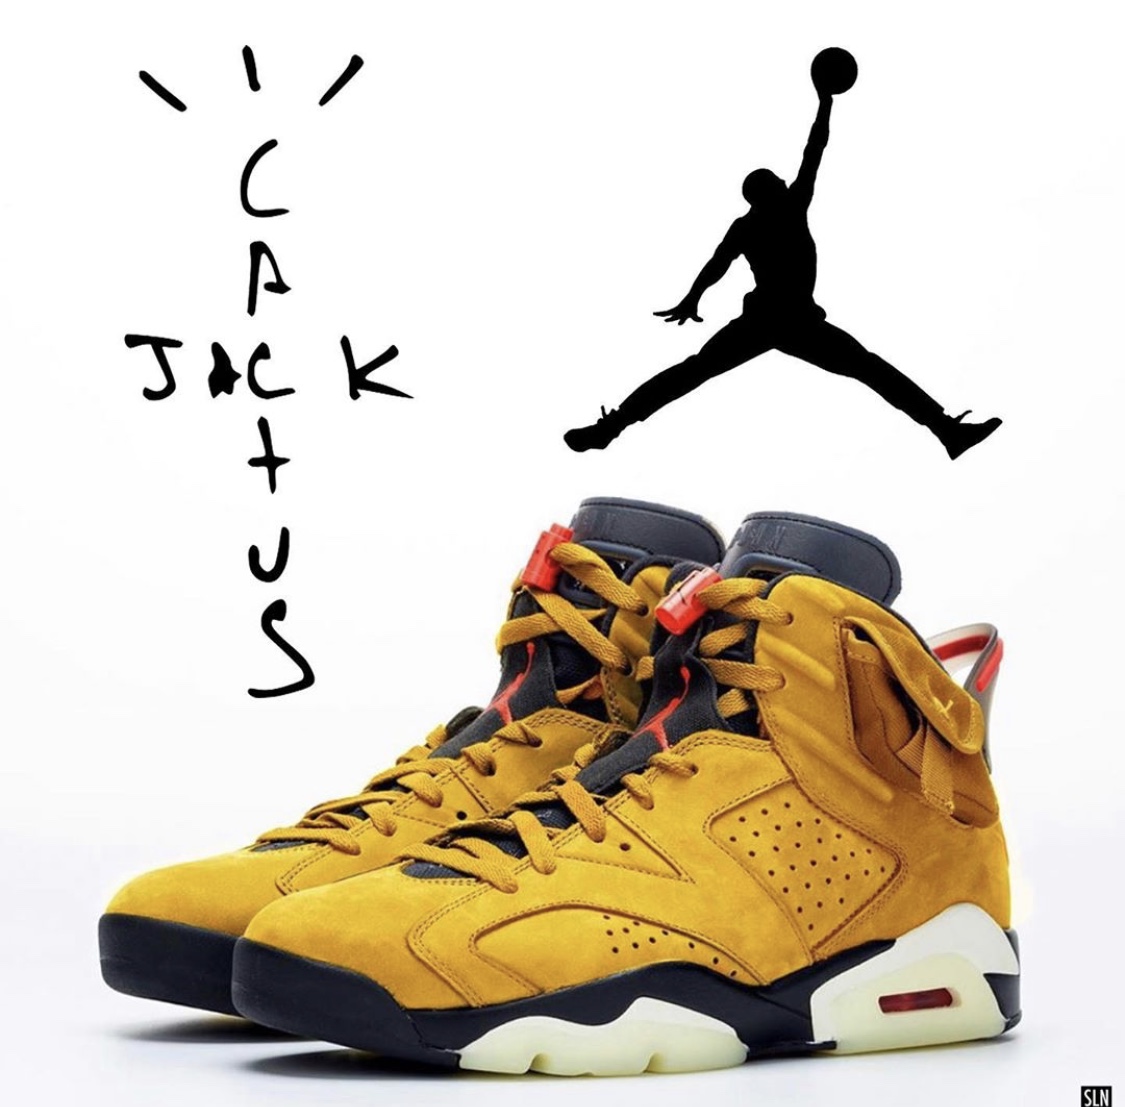 Travis Scott × Nike】Air Jordan 6 Retro SP “Yellow”が2020年3月に 